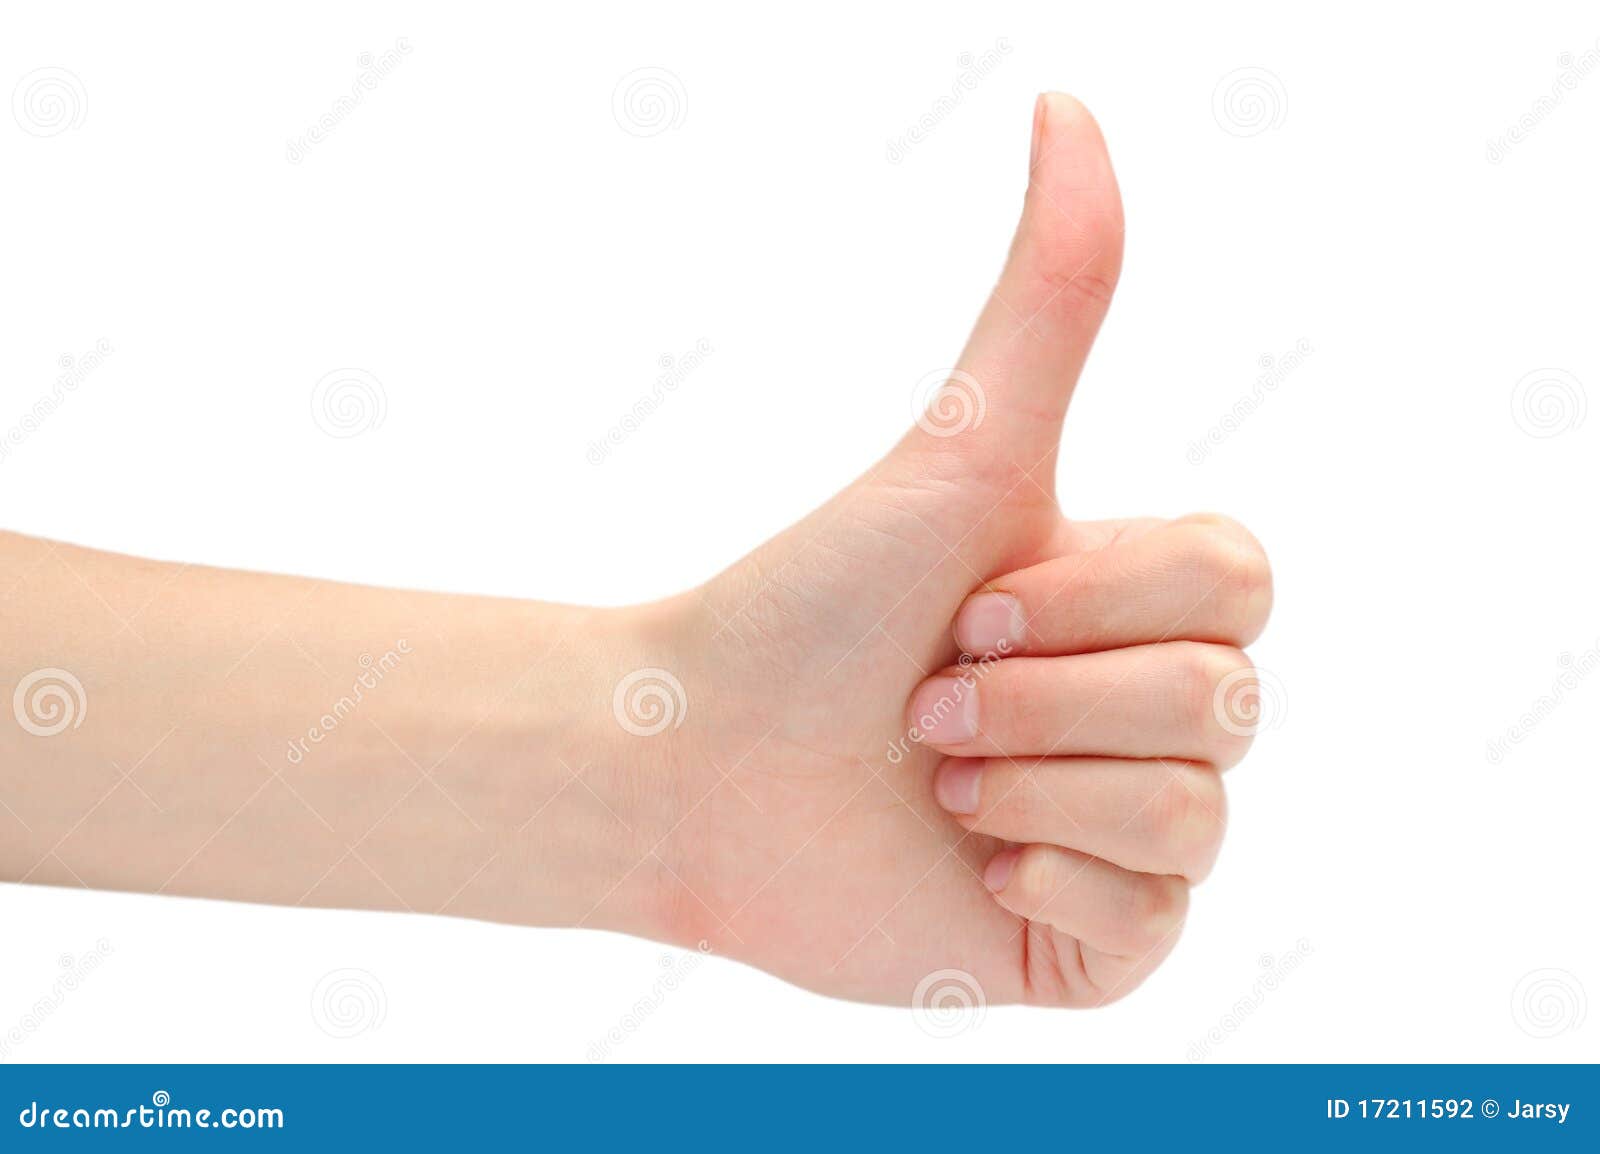 hand expressing positivity